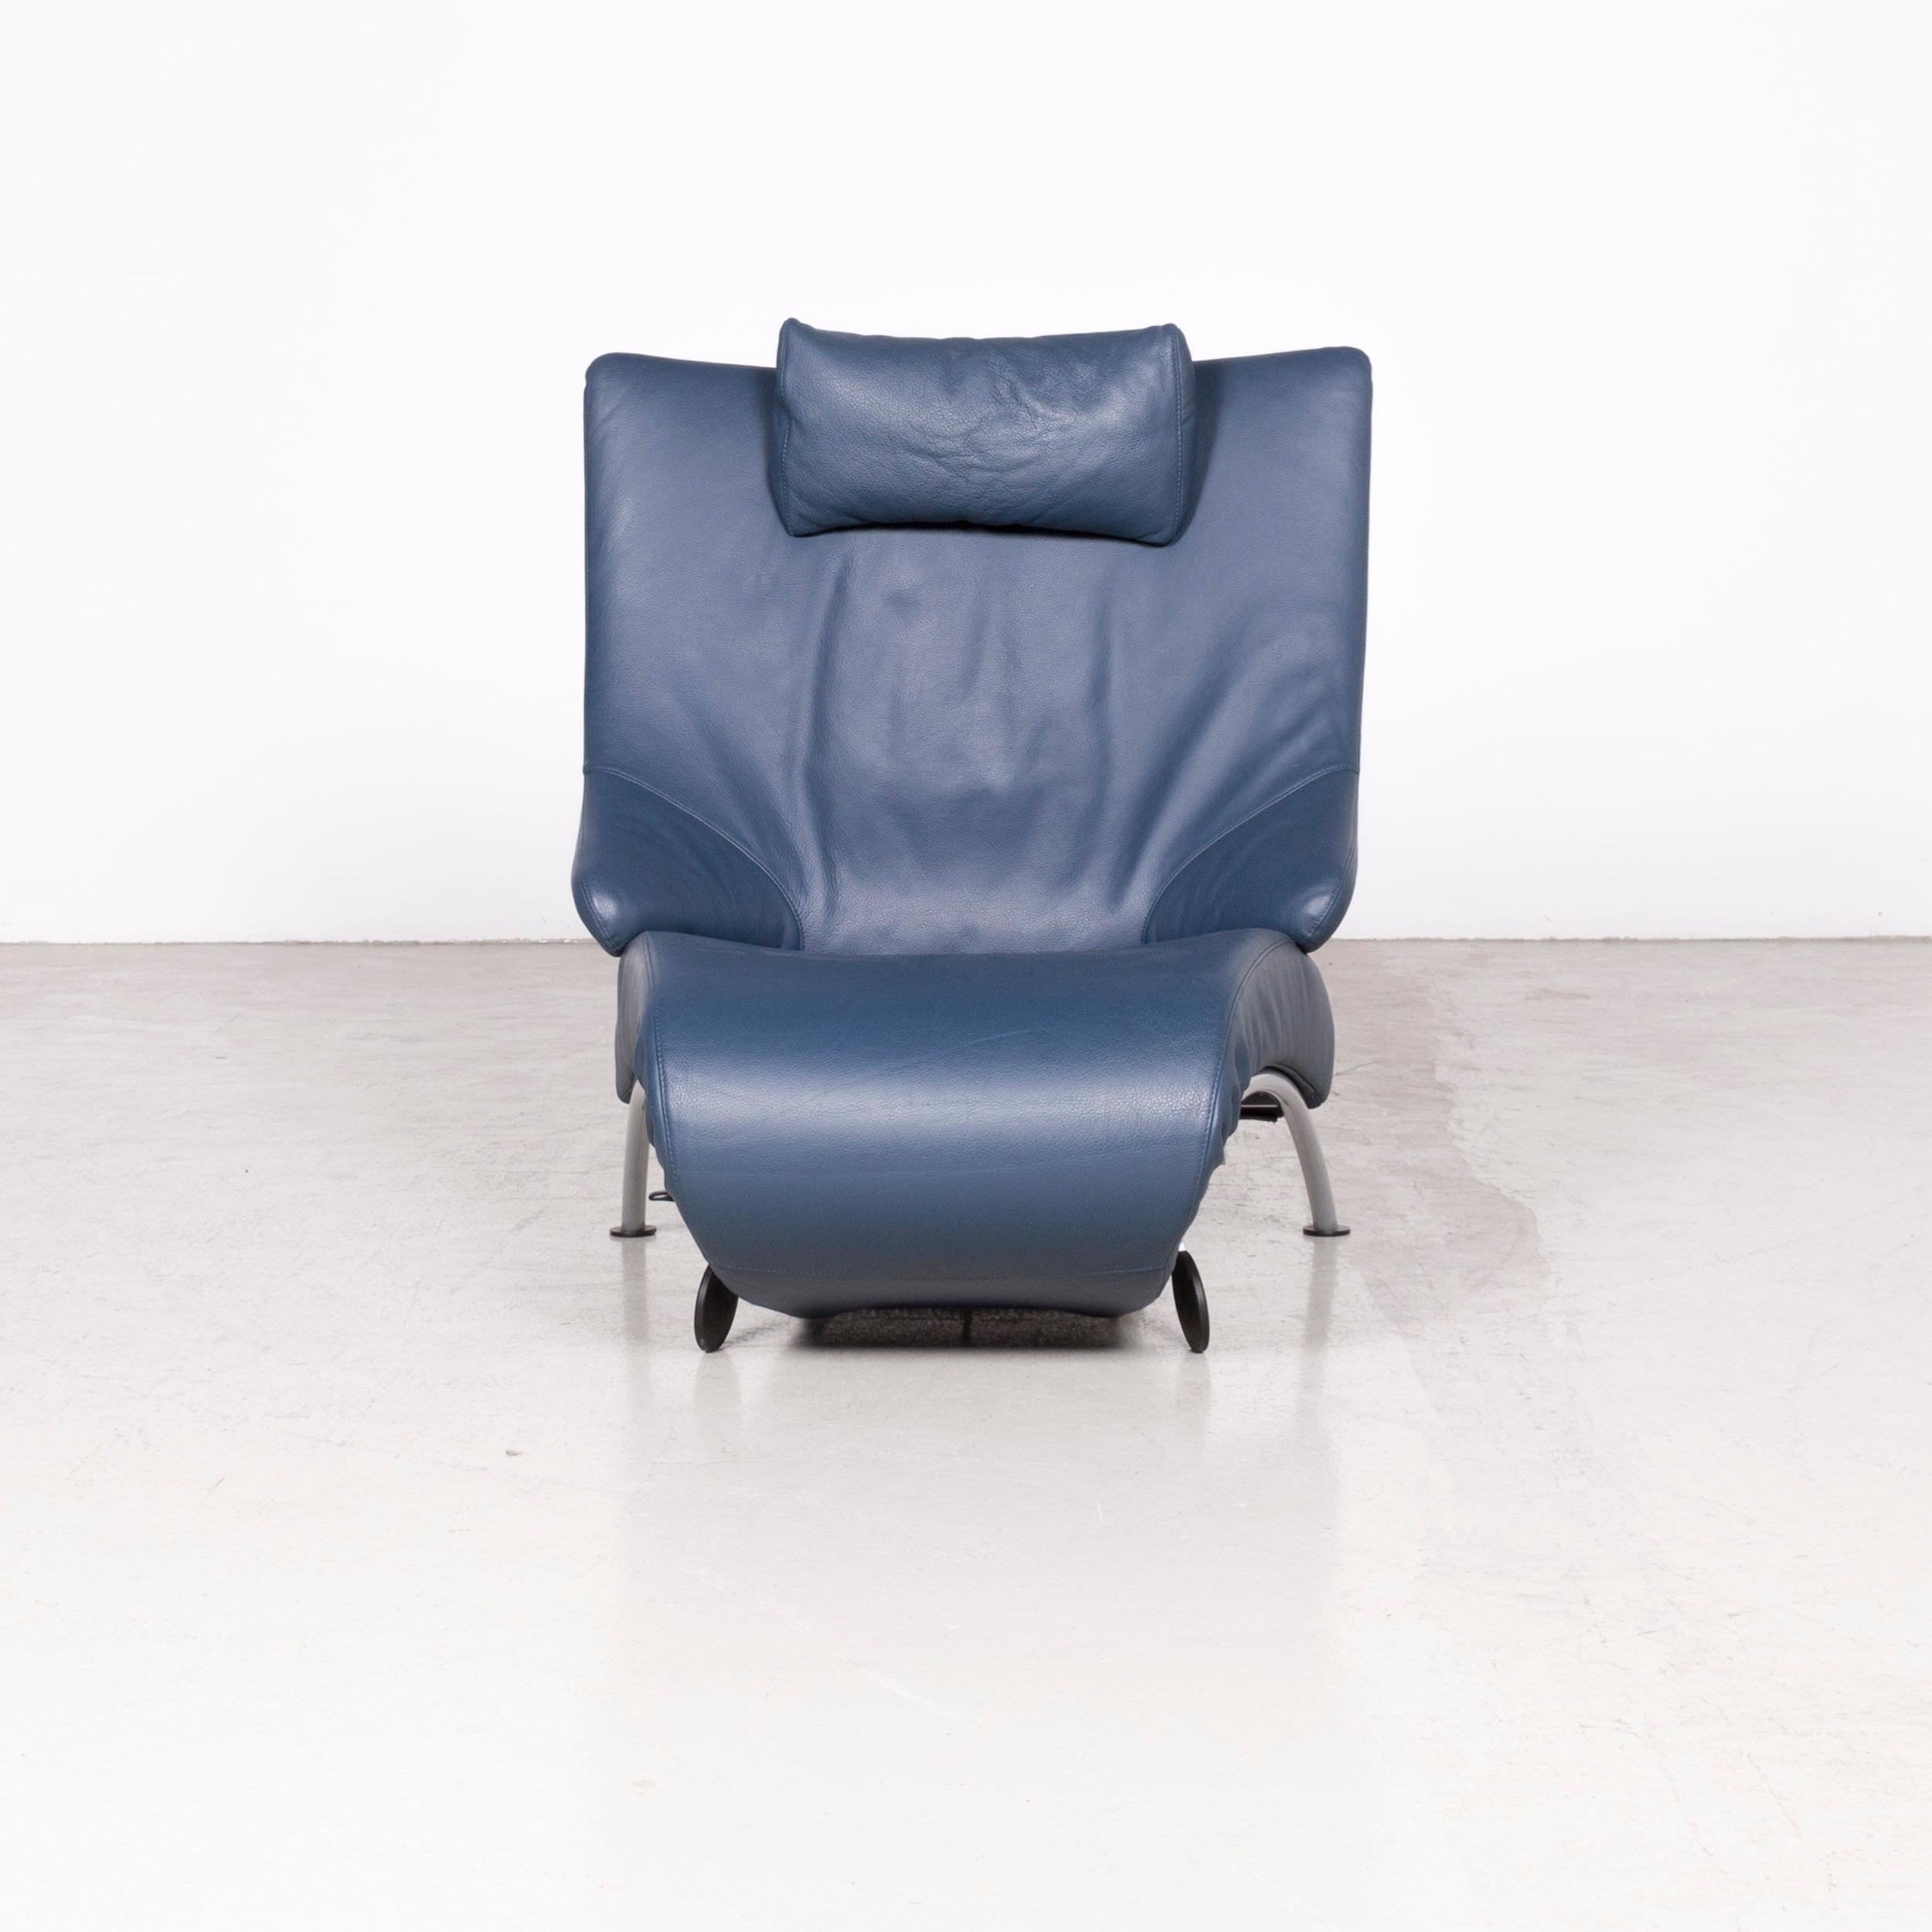 WK Wohnen solo 699 designer leather chair blue one-seat.